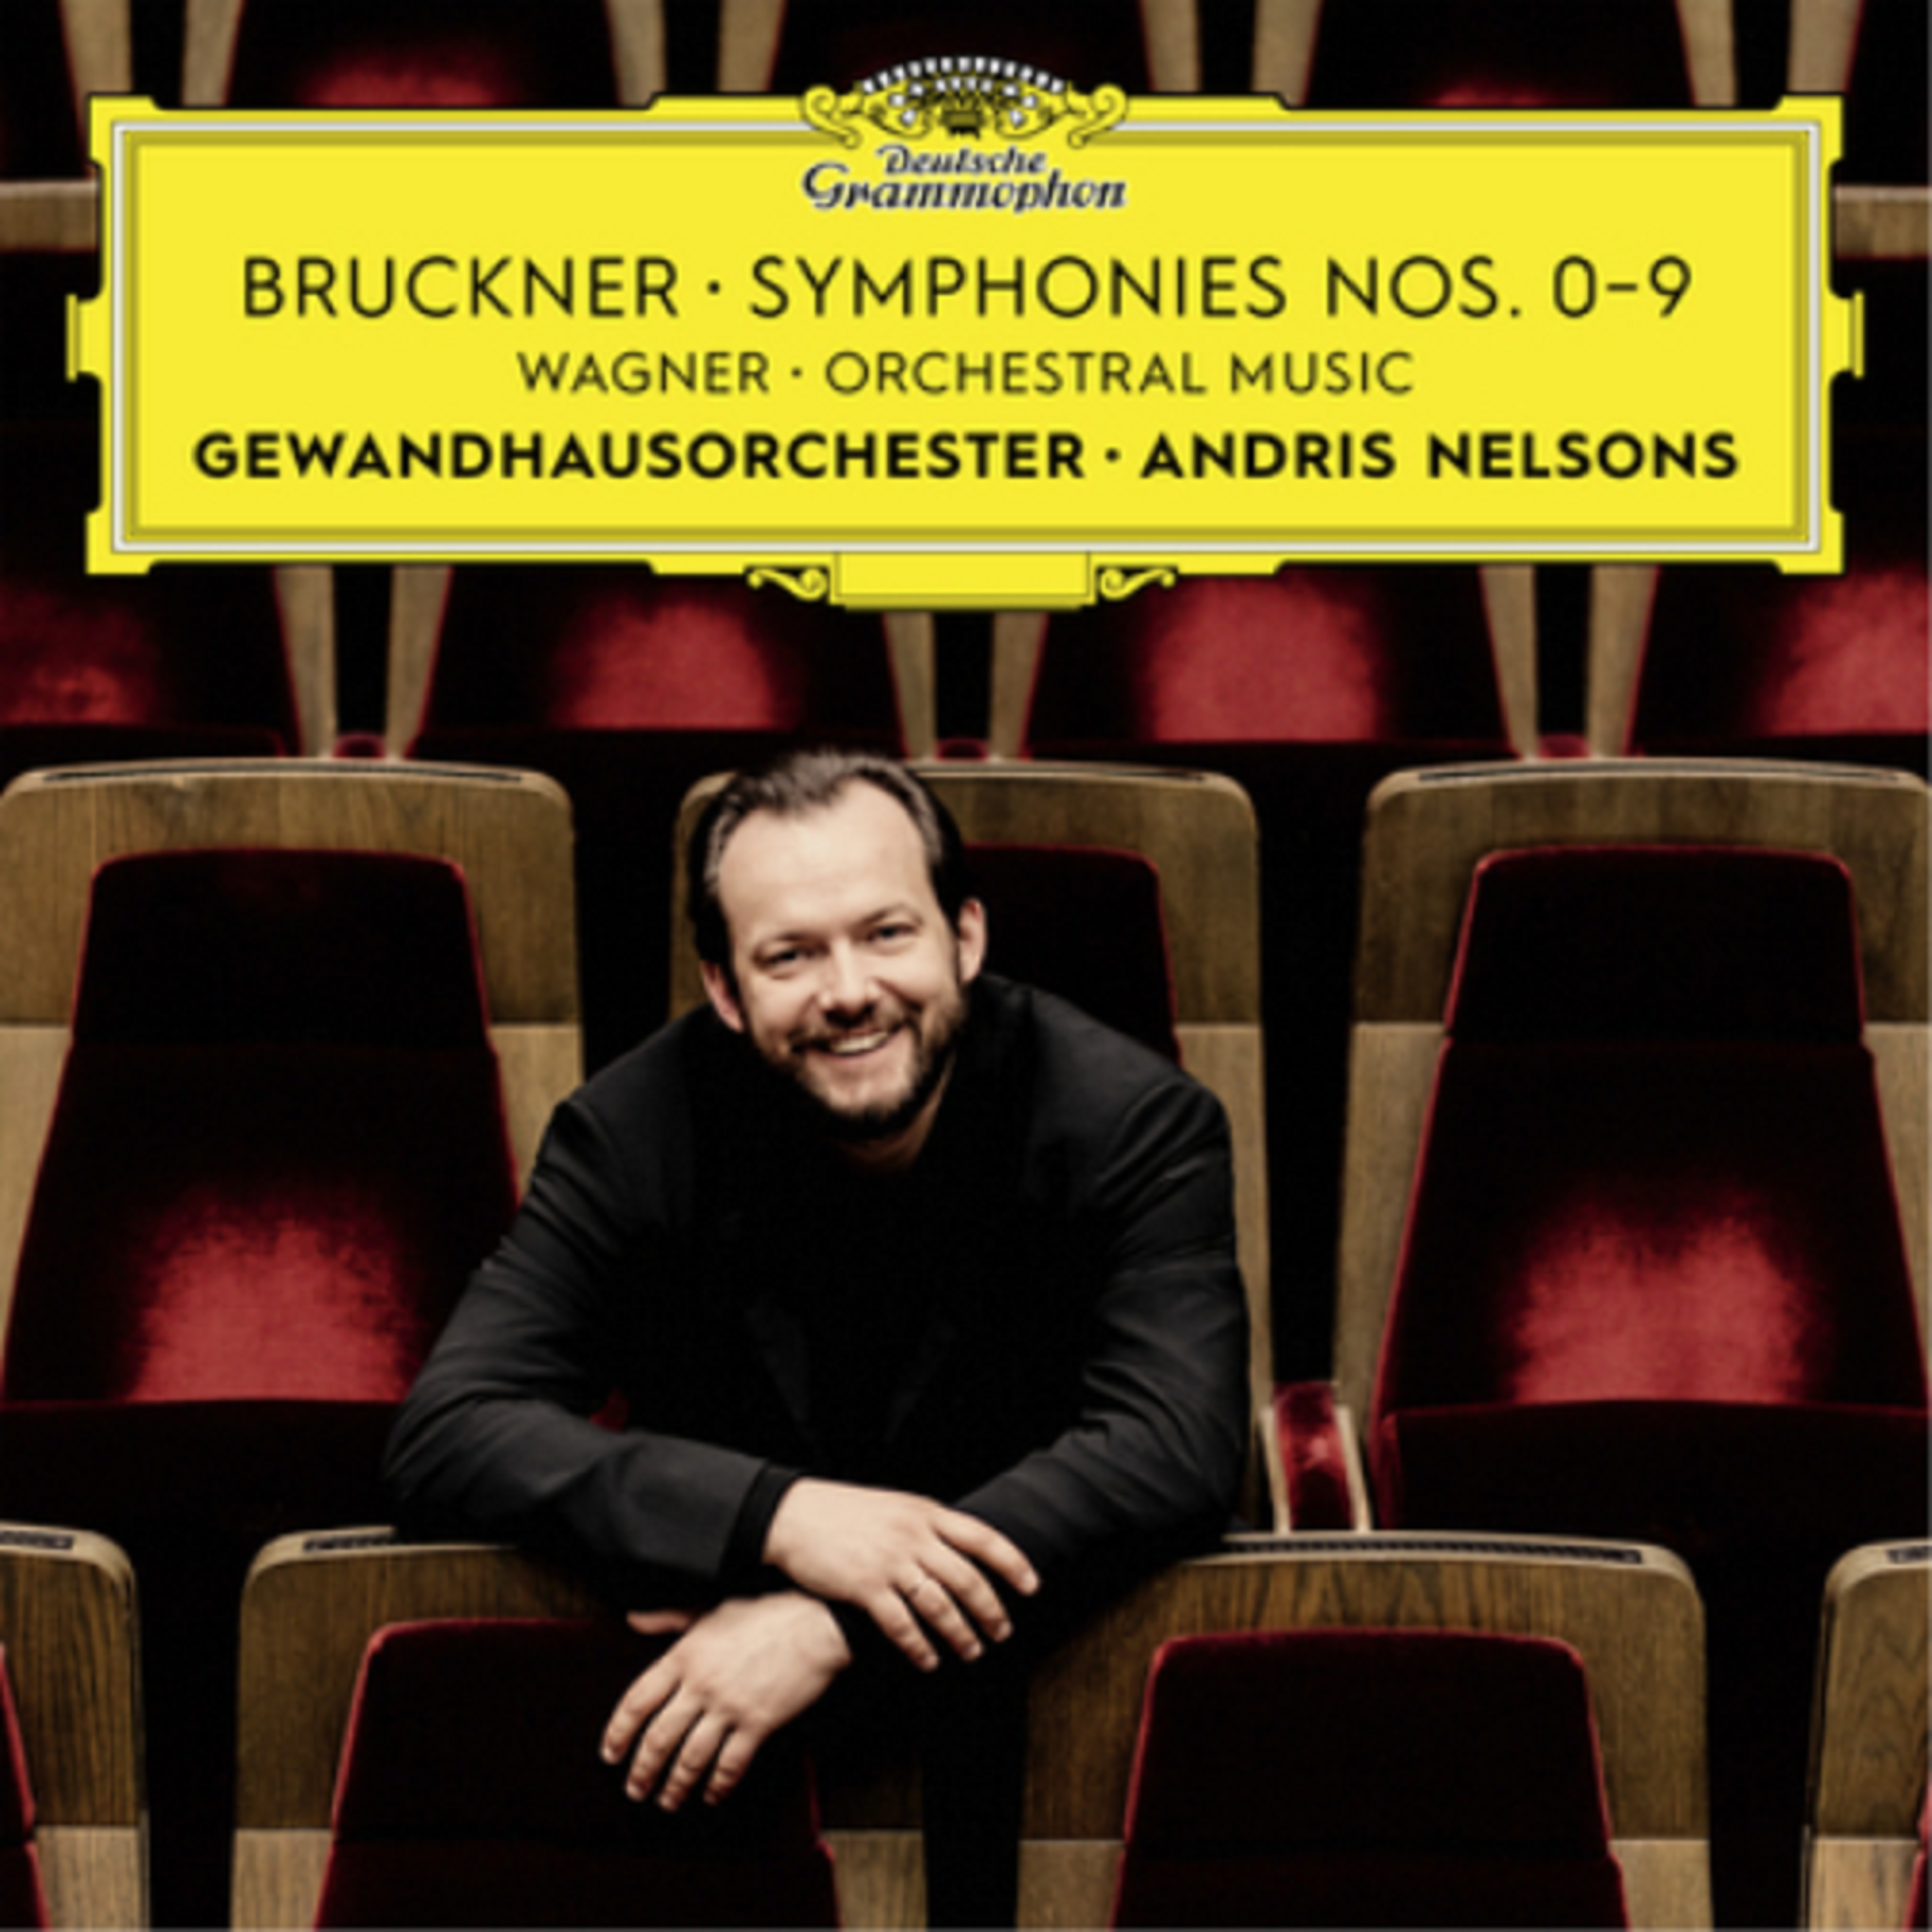 Bruckner: Symphonies Nos. 0-9 / Wagner: Orchestral Music | Andris Nelsons, Gewandhausorchester